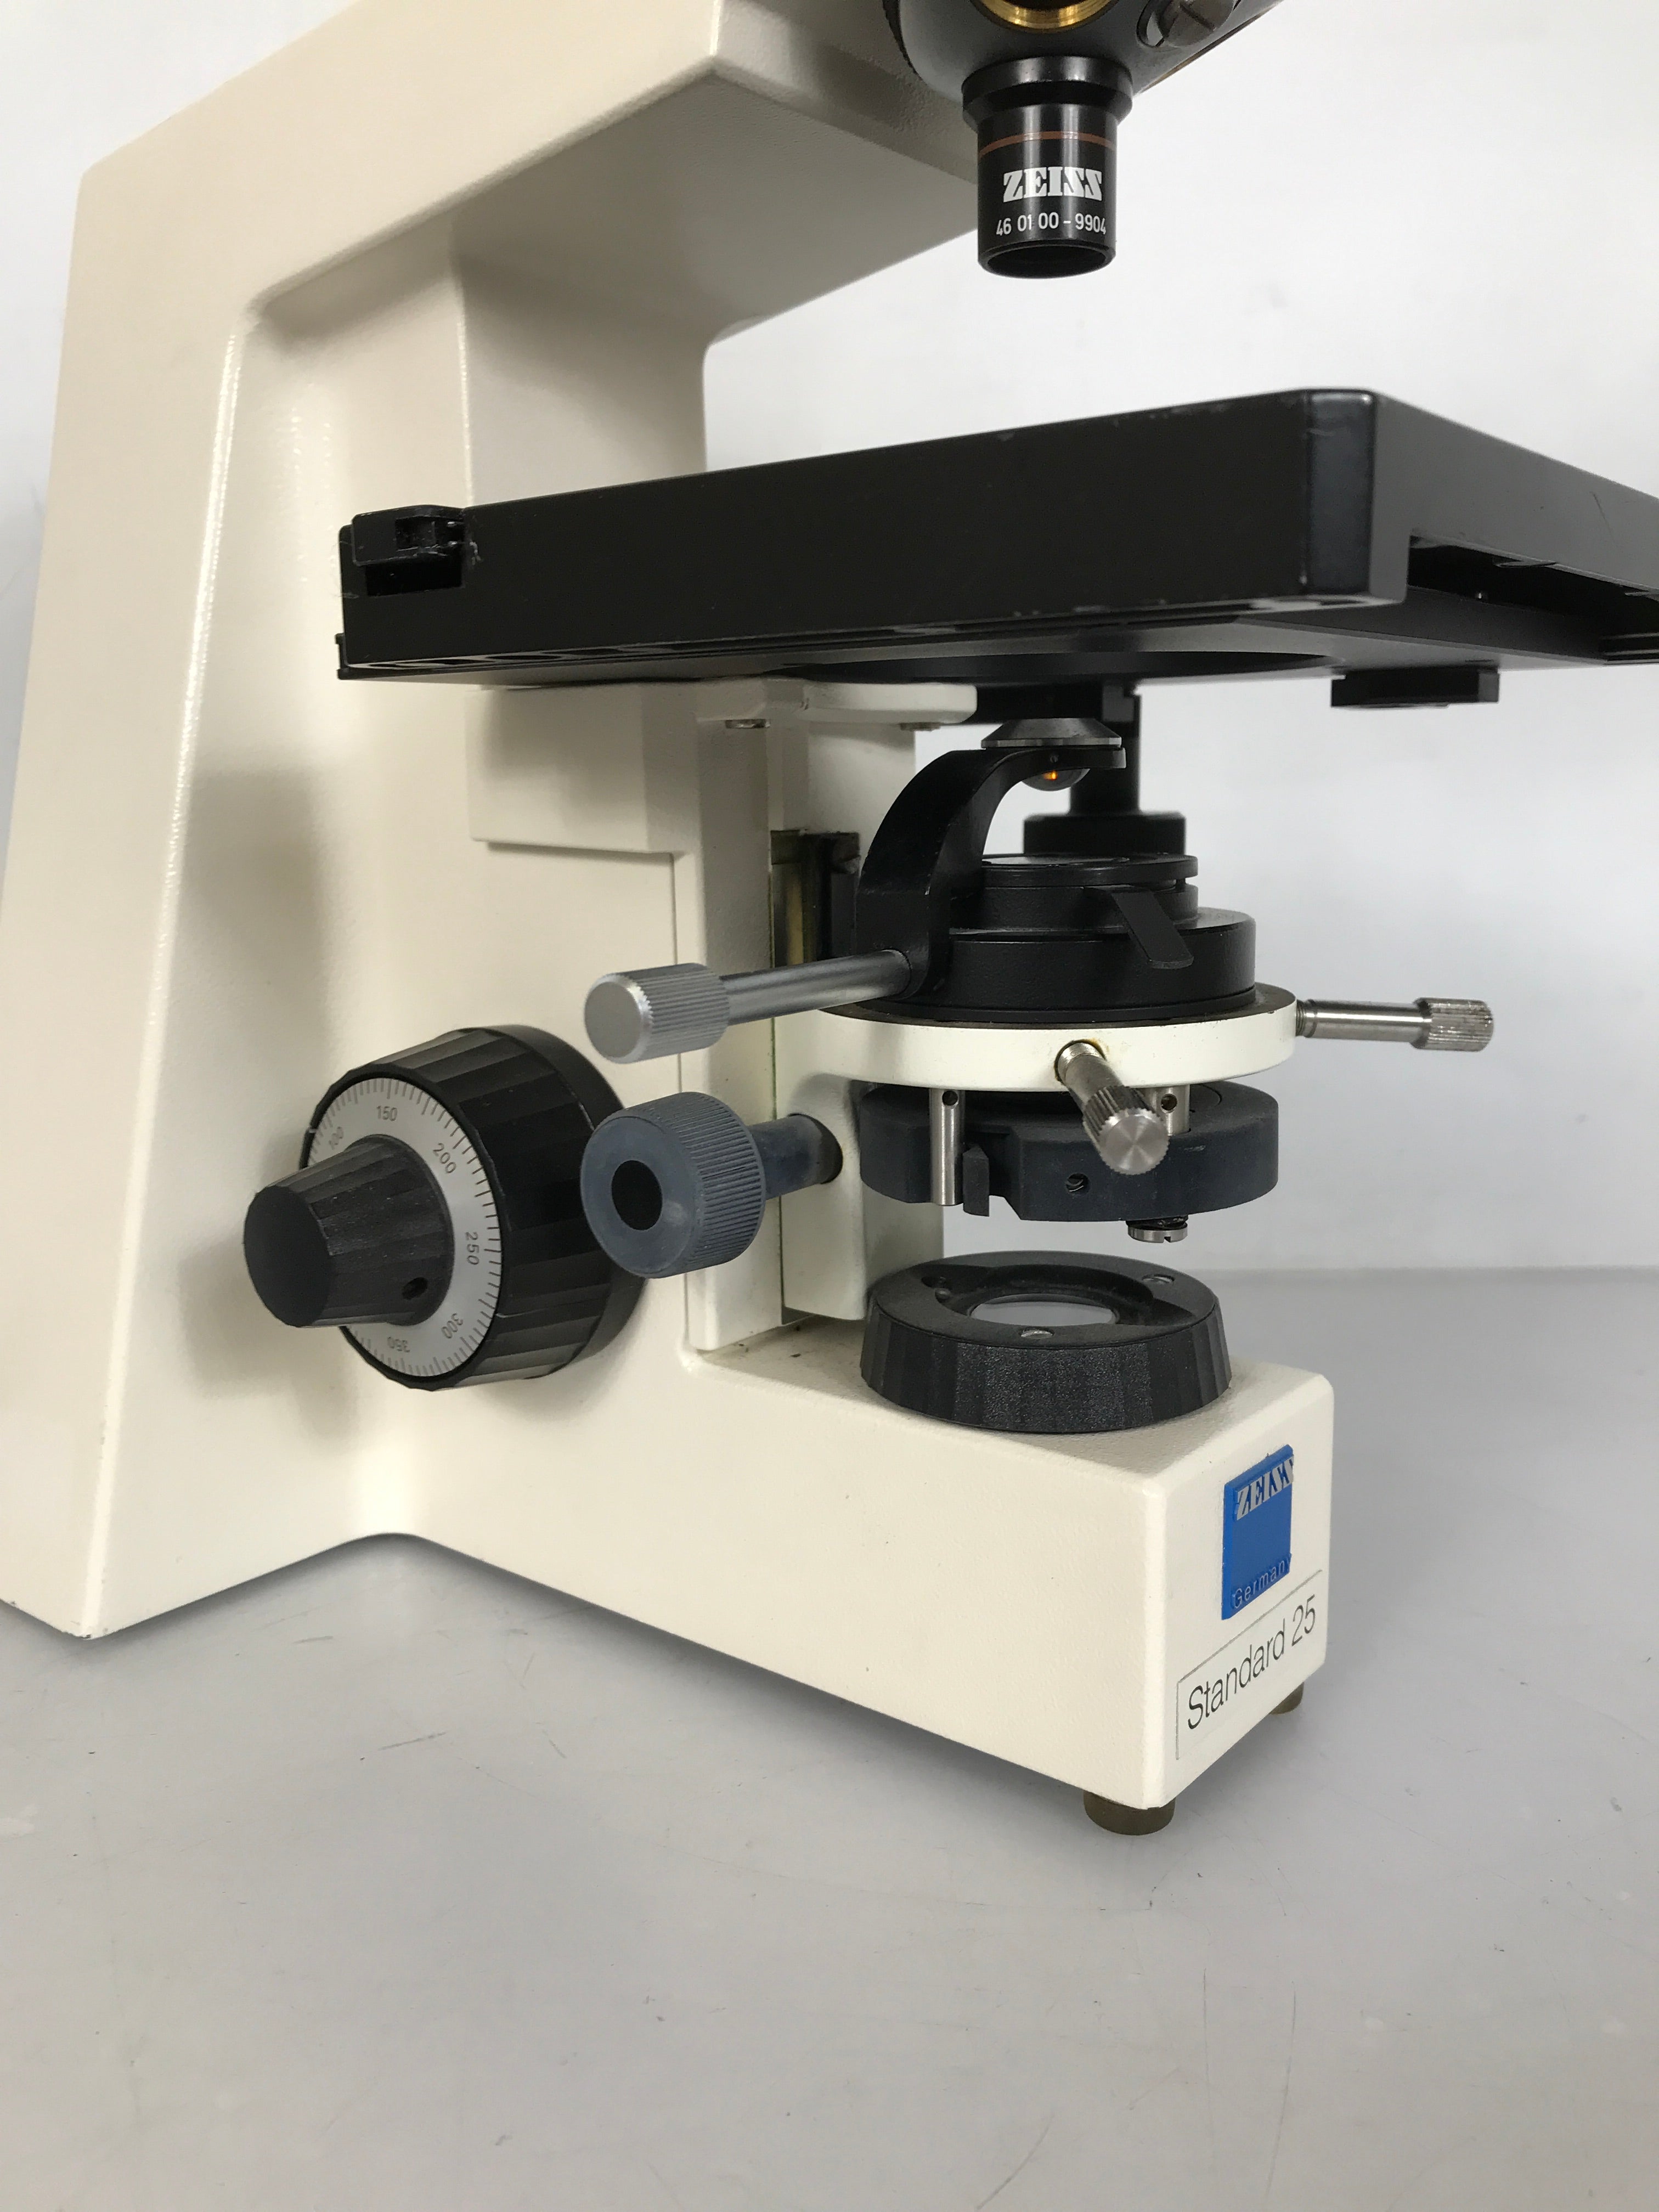 Carl Zeiss Standard 25 Binocular Microscope *For Parts or Repair* #2